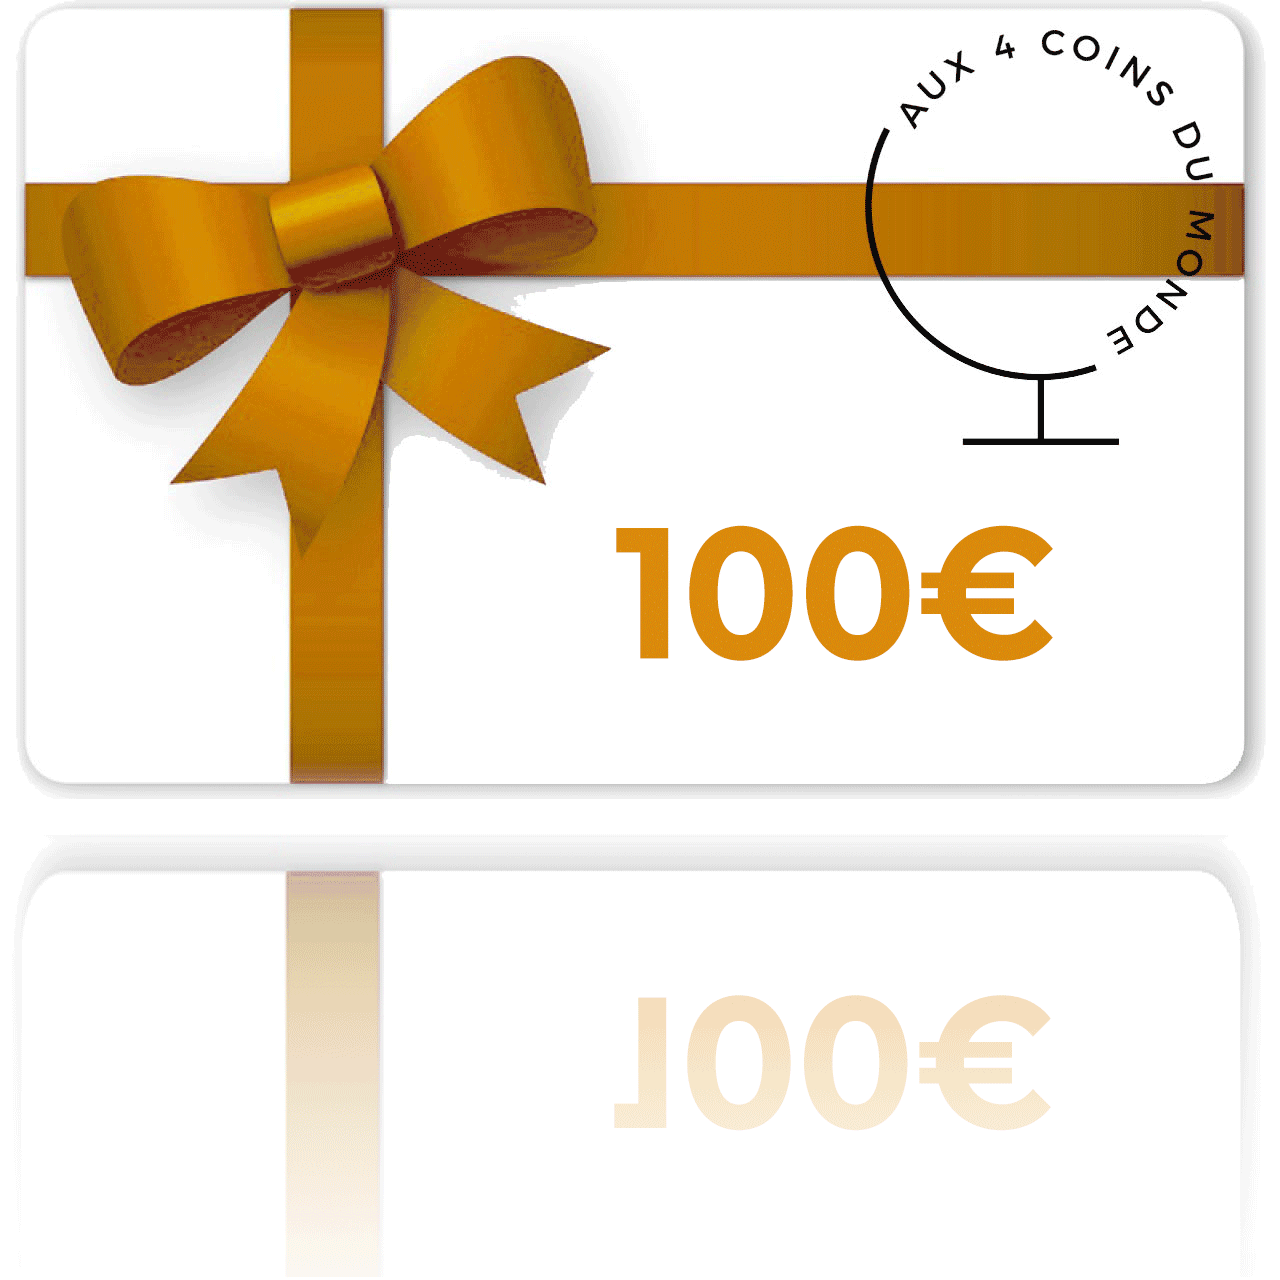 Carte cadeau 100€ - Labelugueprovencale